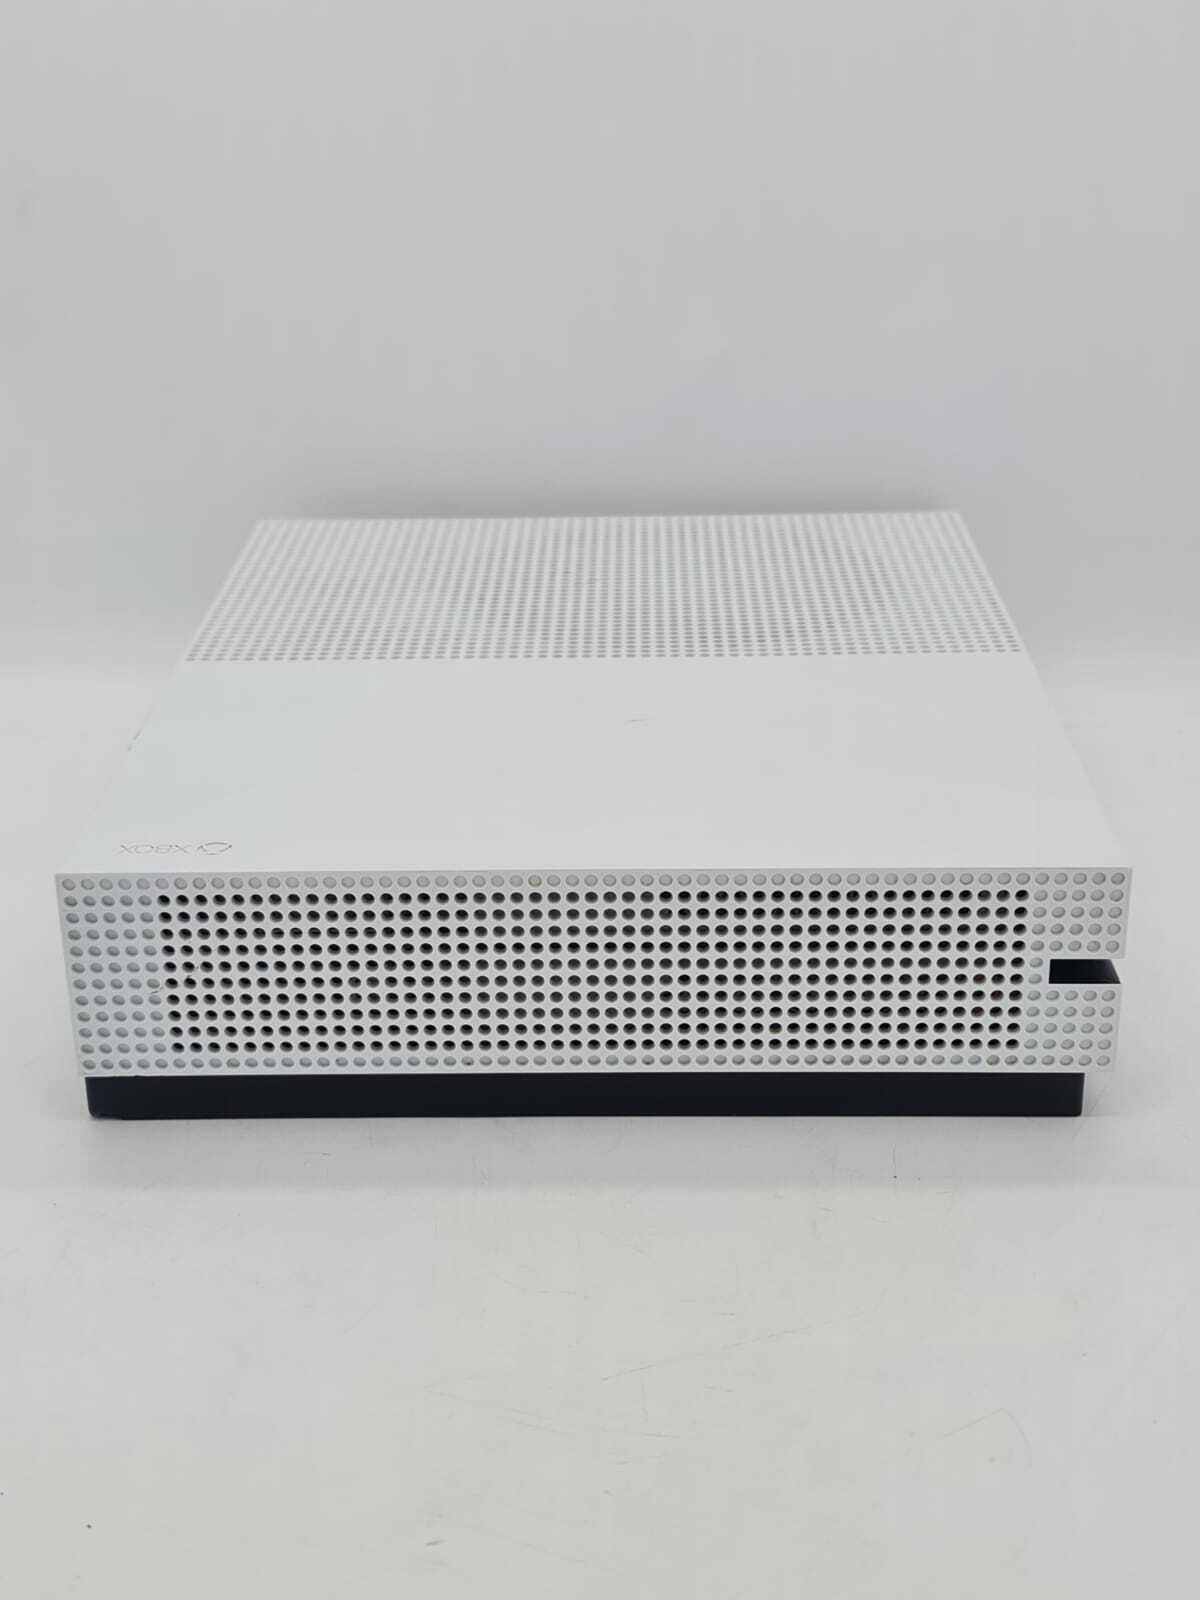 Microsoft Xbox One S 500GB Console (White) - Pre-Owned